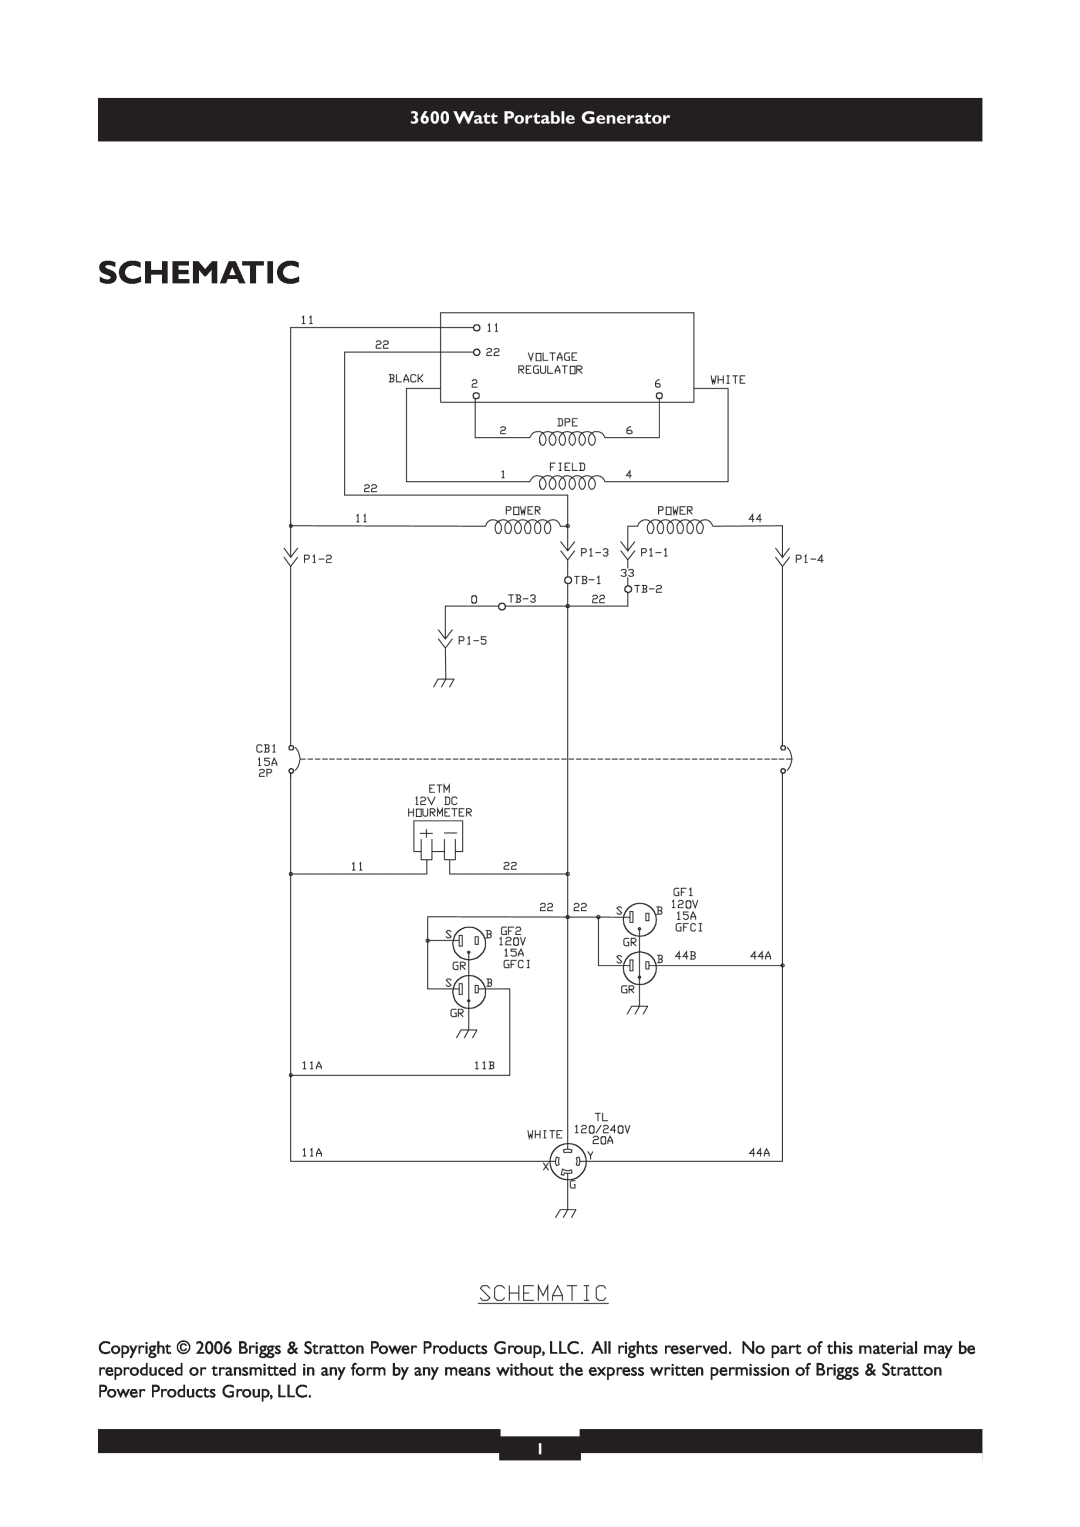 Briggs & Stratton 030231 manual Schematic, Watt Portable Generator 